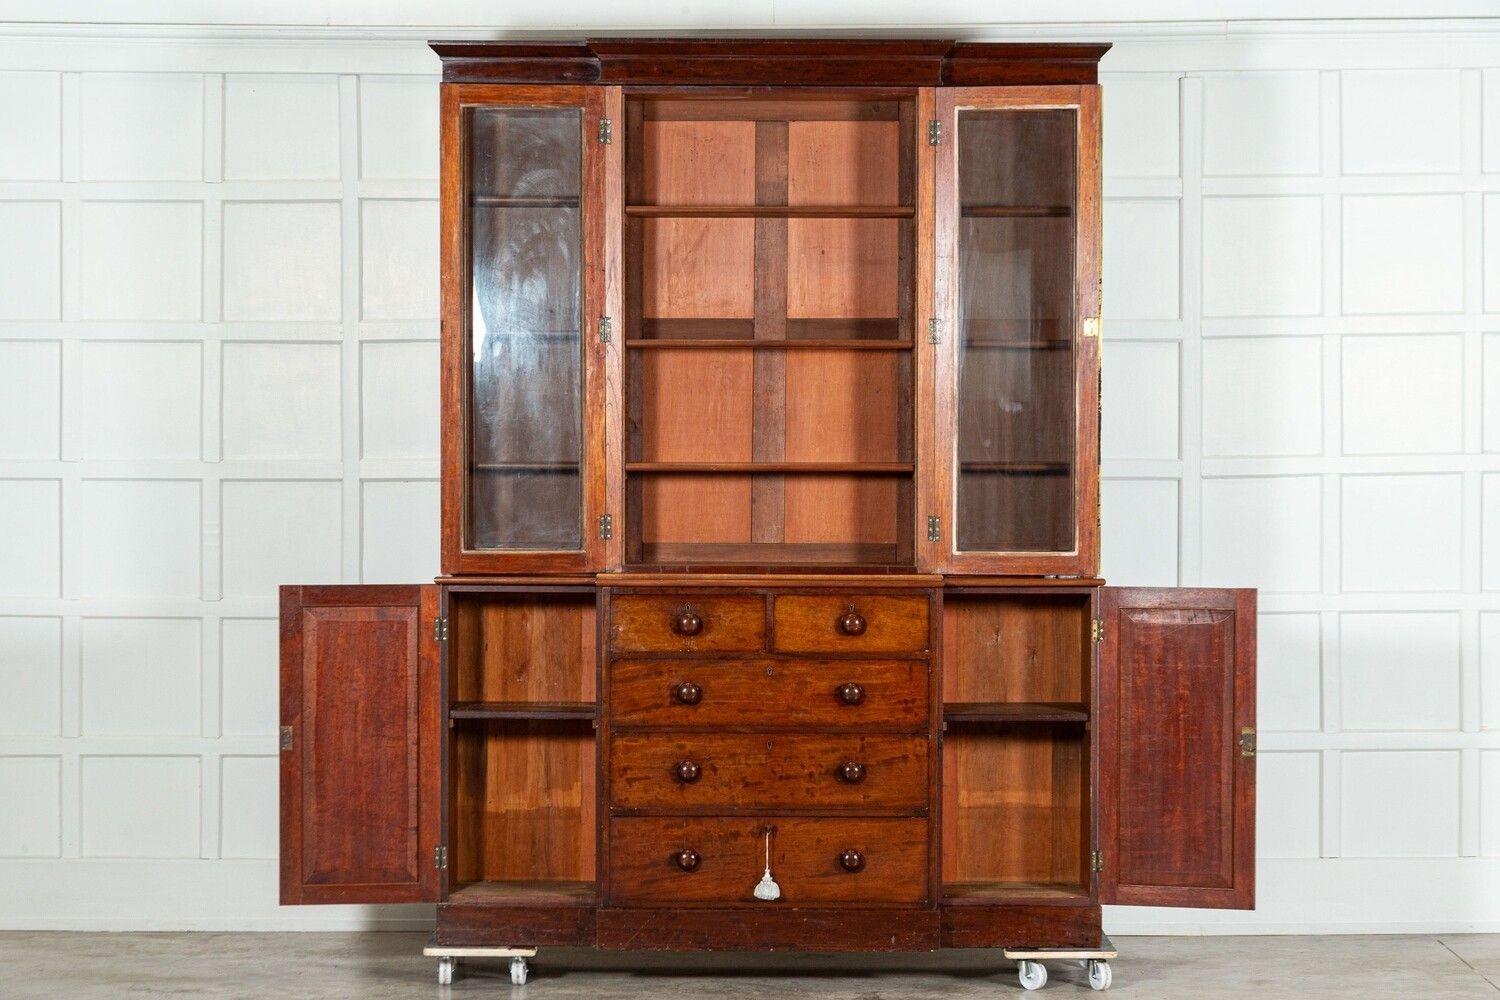 circa 1880
Large English 19thC Mahogany Glazed Breakfront Bookcase
sku 1760
Base W178 x D42 x H98 cm
Top W182 x D37 x H142 cm
Together W182 x D37 x H240 cm
Weight 153 Kg